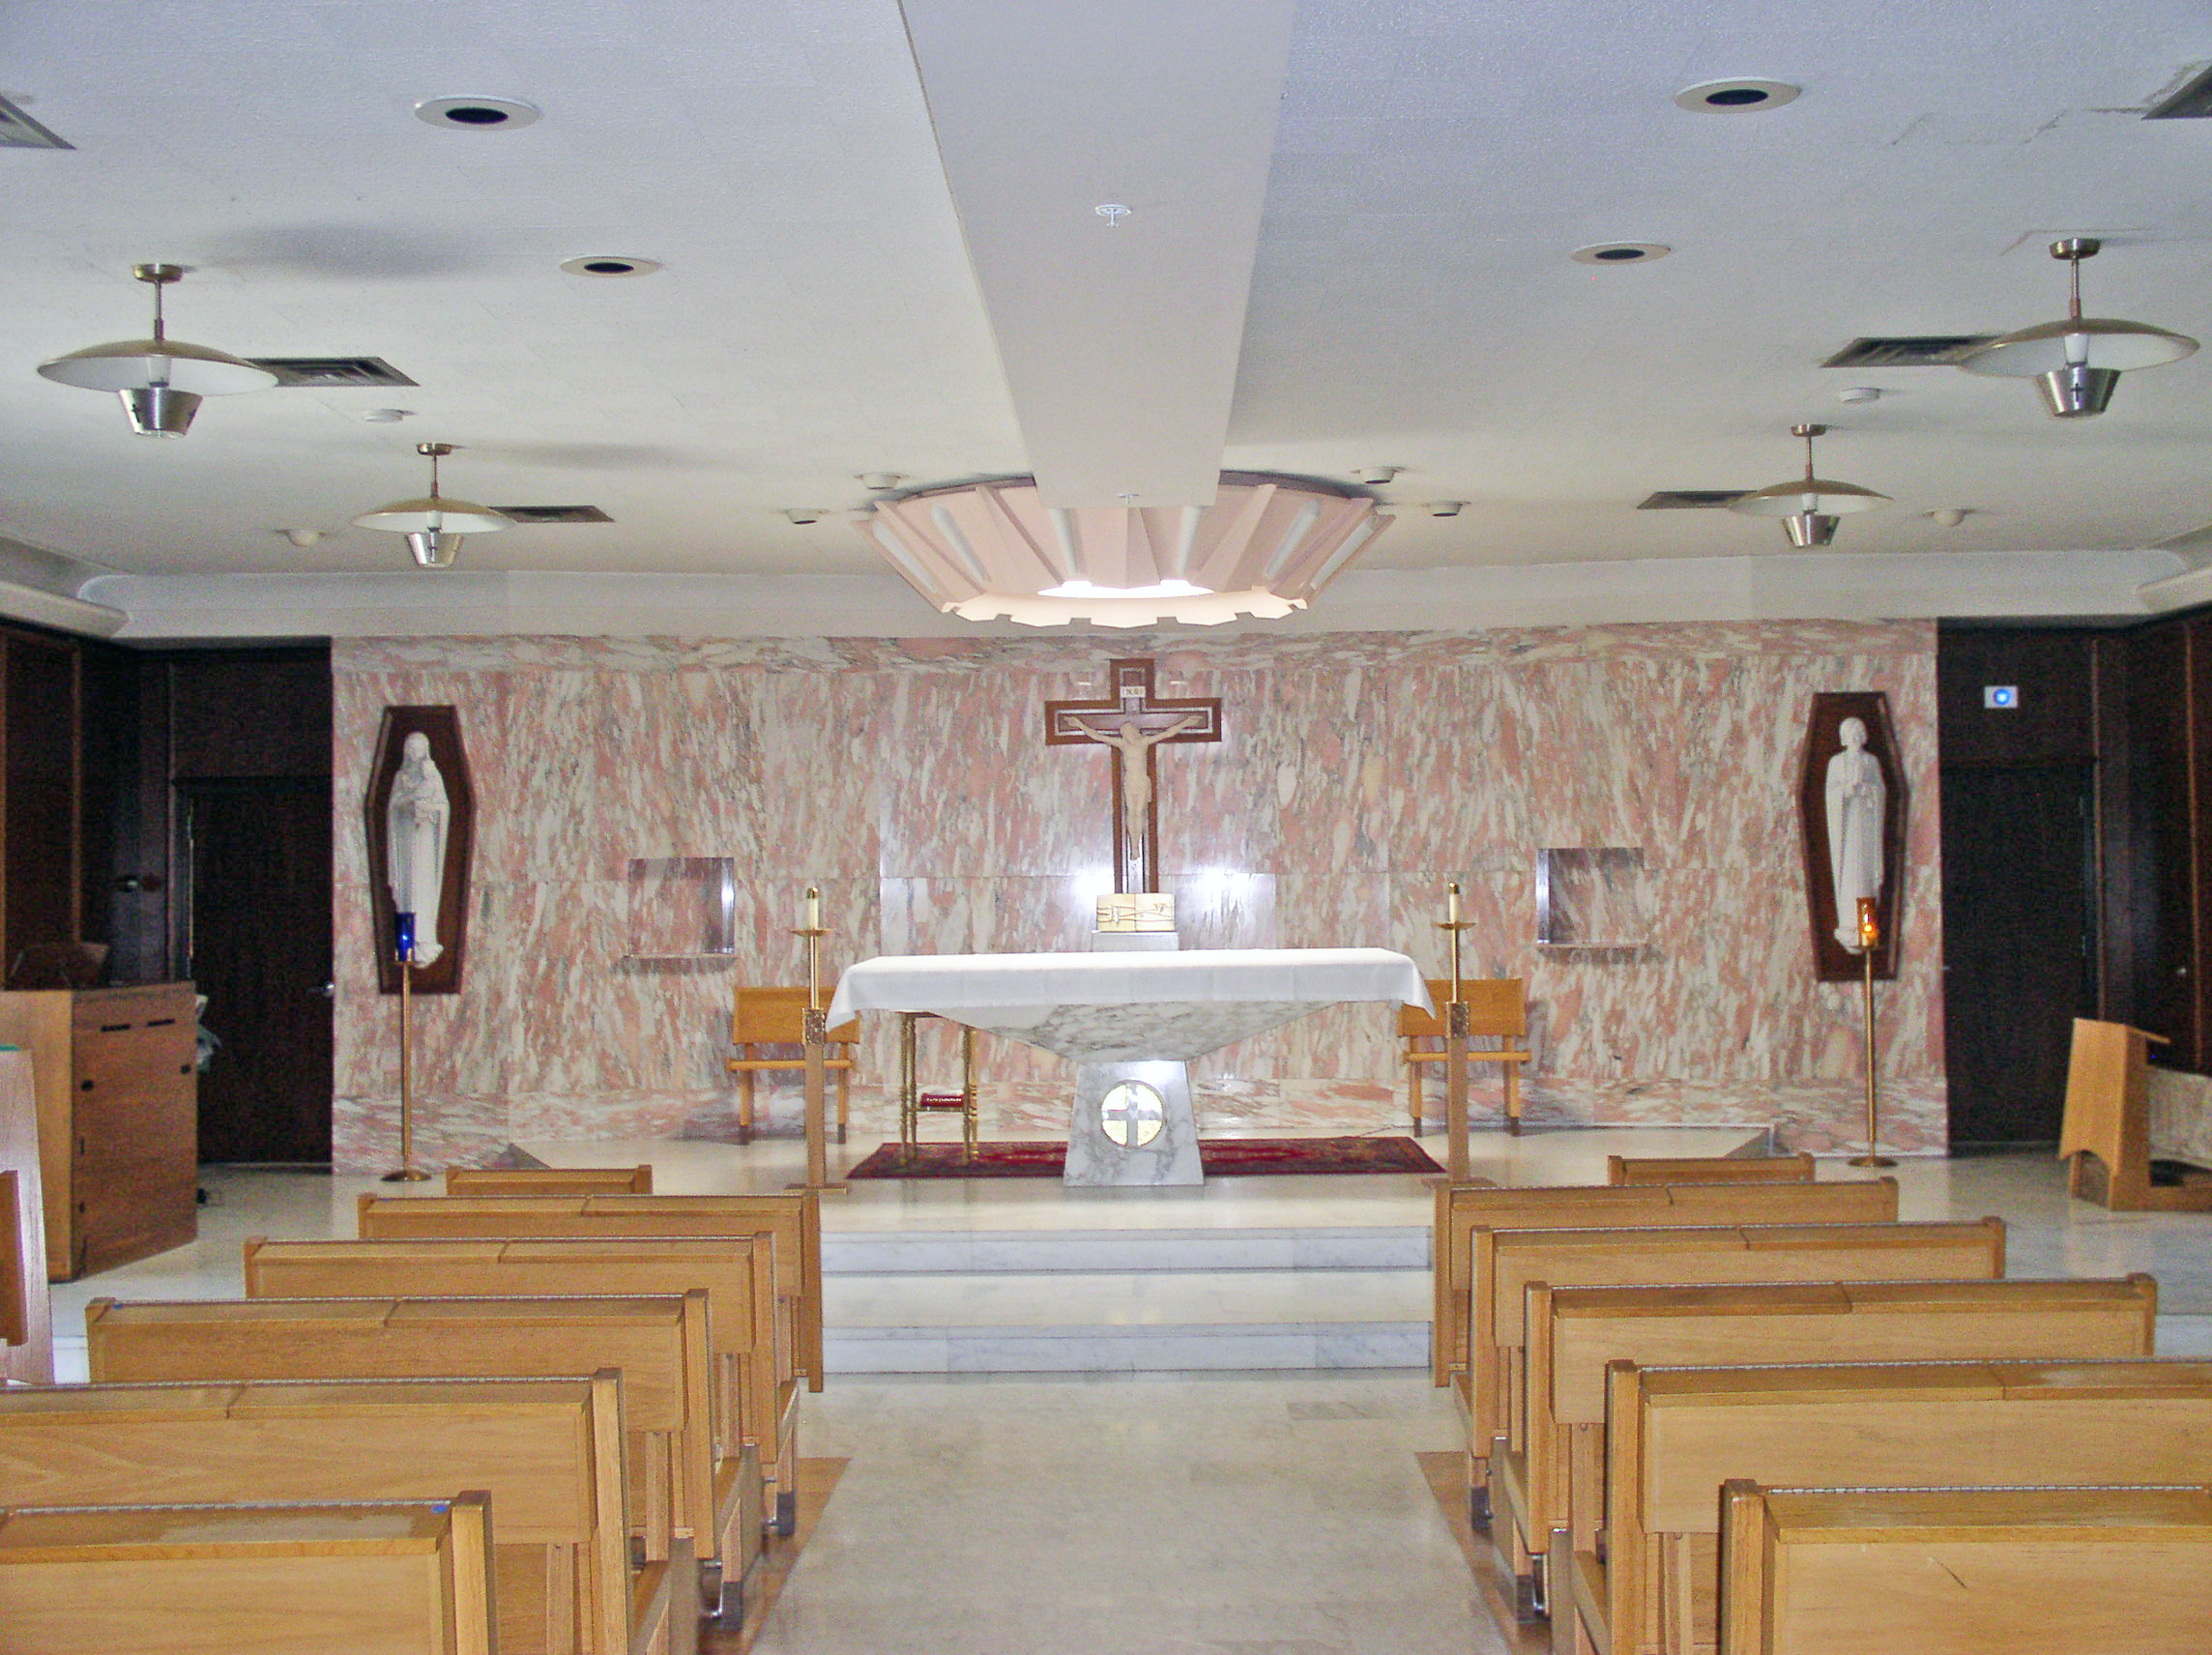 New Chapel